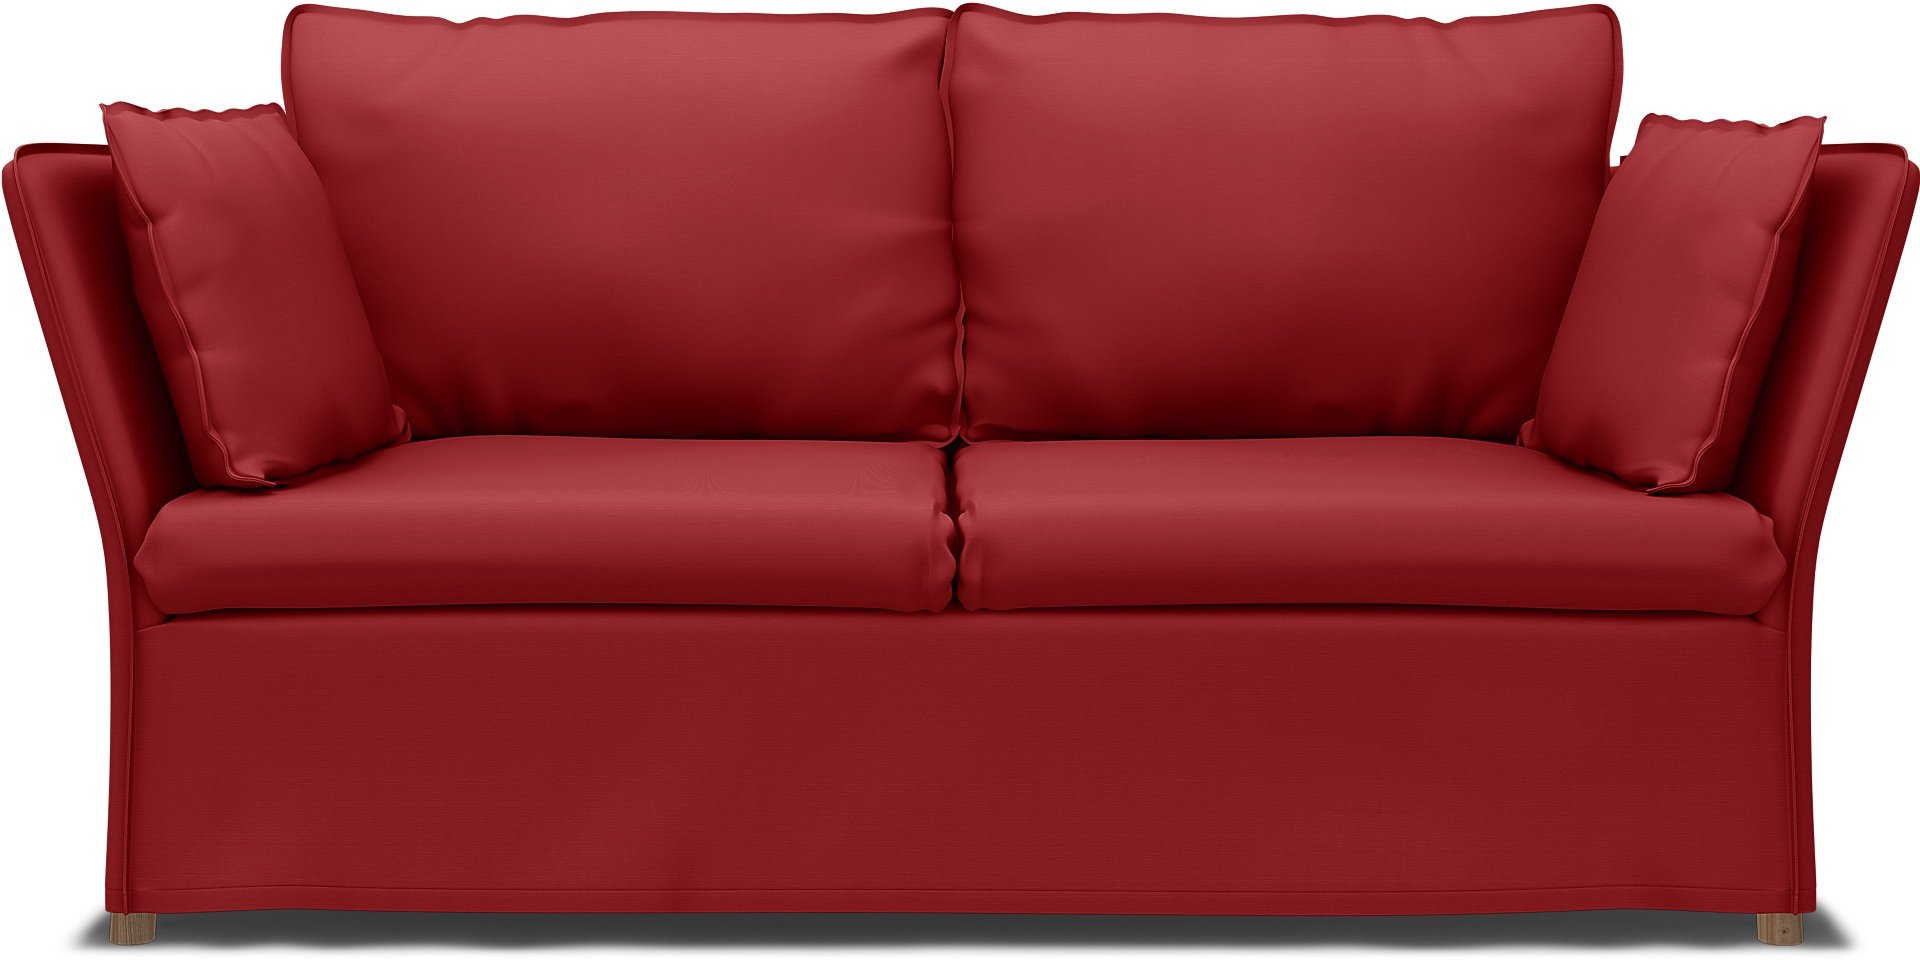 IKEA - Backsalen 2 seater sofa, Scarlet Red, Cotton - Bemz